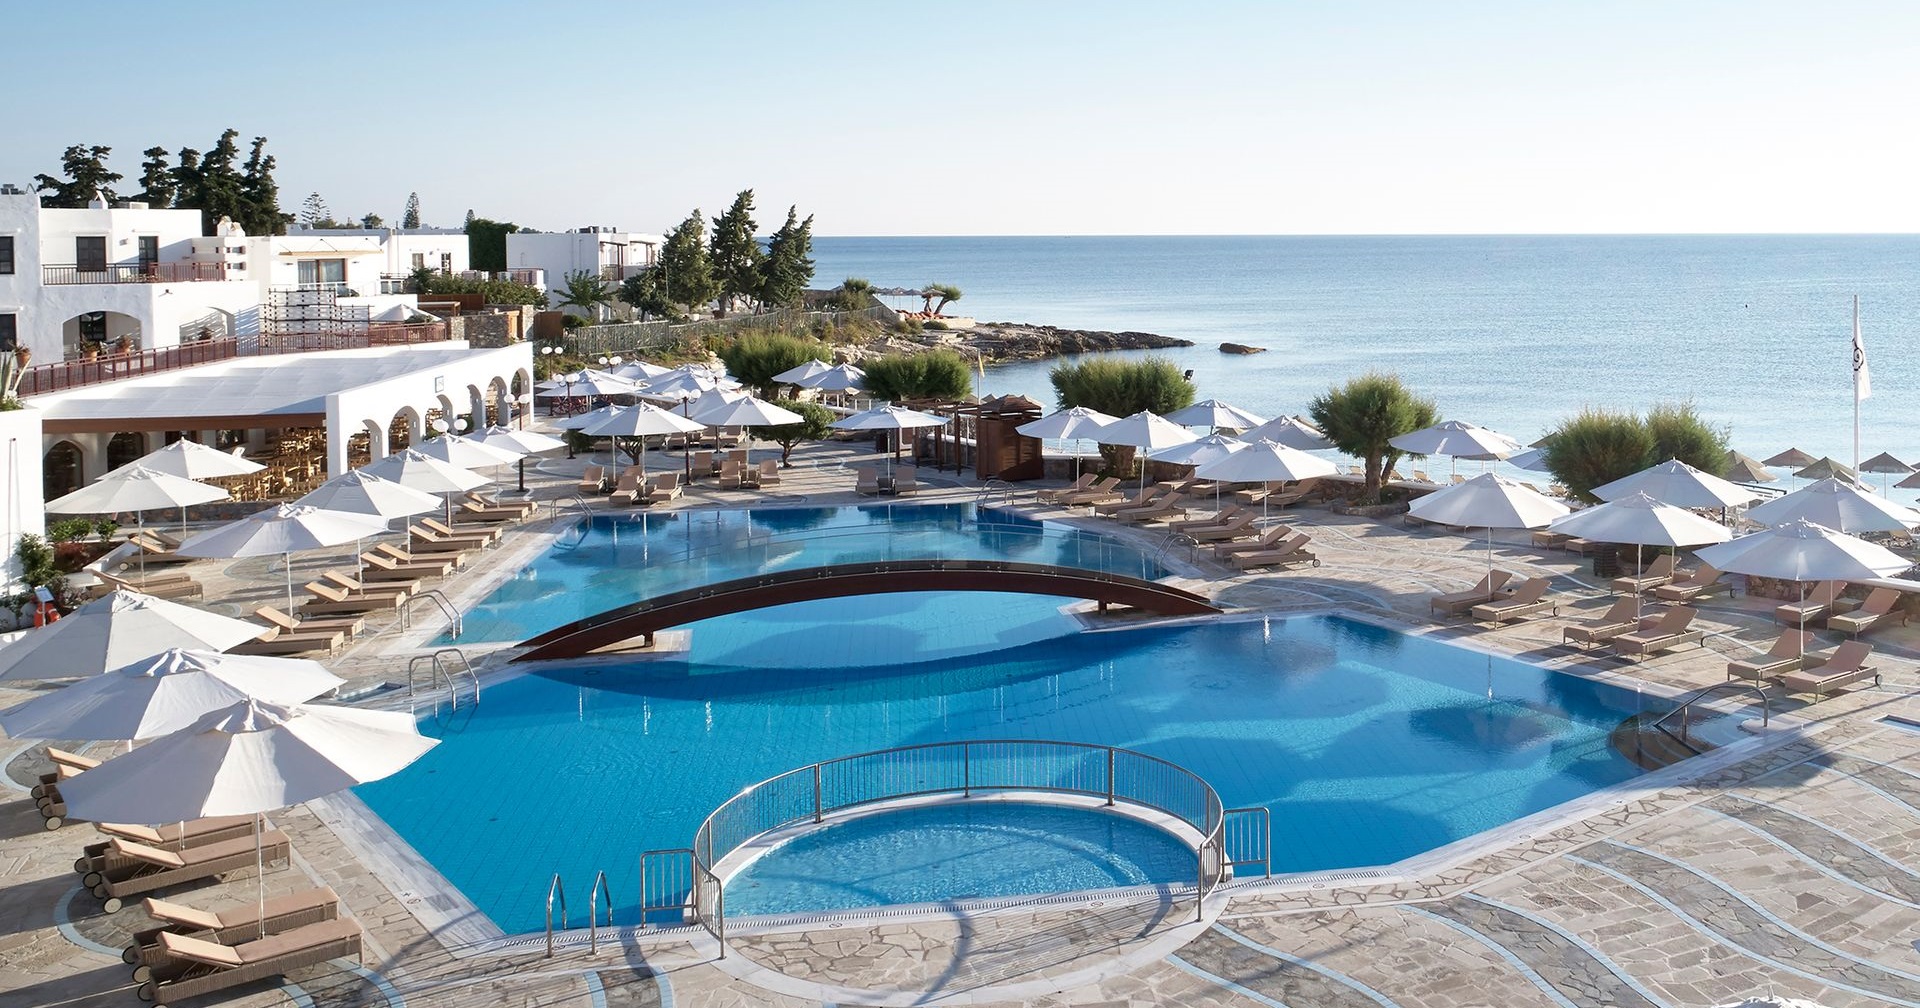 5* Creta Maris Beach Resort - Χερσόνησος, Ηράκλειο ✦ 2 Ημέρες (1 Διανυκτέρευση) ✦ 2 άτομα + 1 παιδί έως 11 ετών ✦ 12 ✦ 02/04/2022 έως 30/09/2022 ✦ Μπροστά στην παραλία!